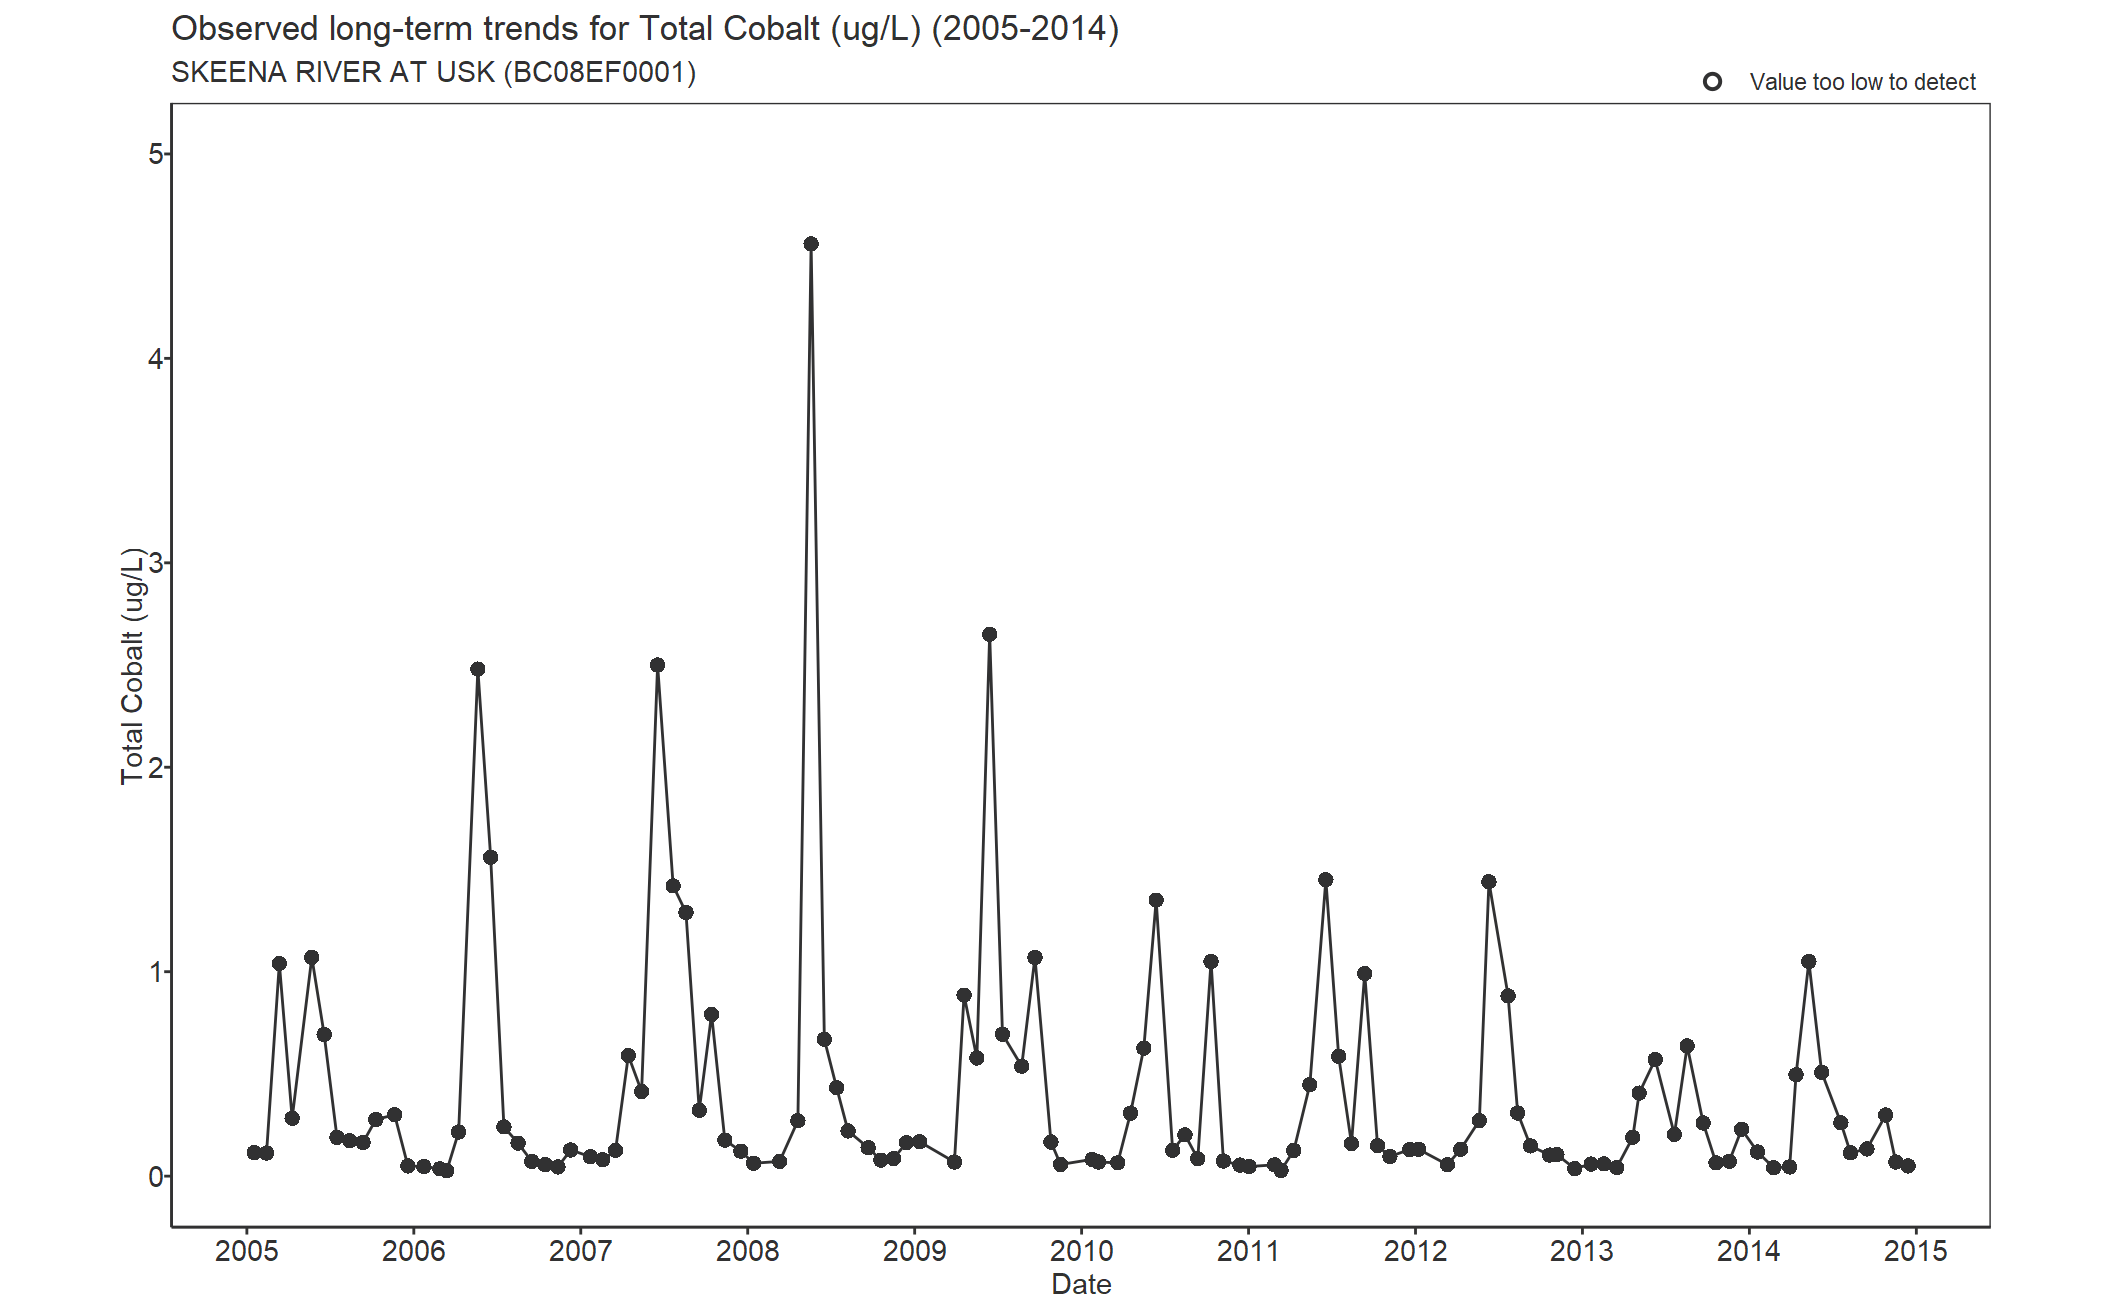 Observed long-term trends for Total Cobalt (2005-2014)